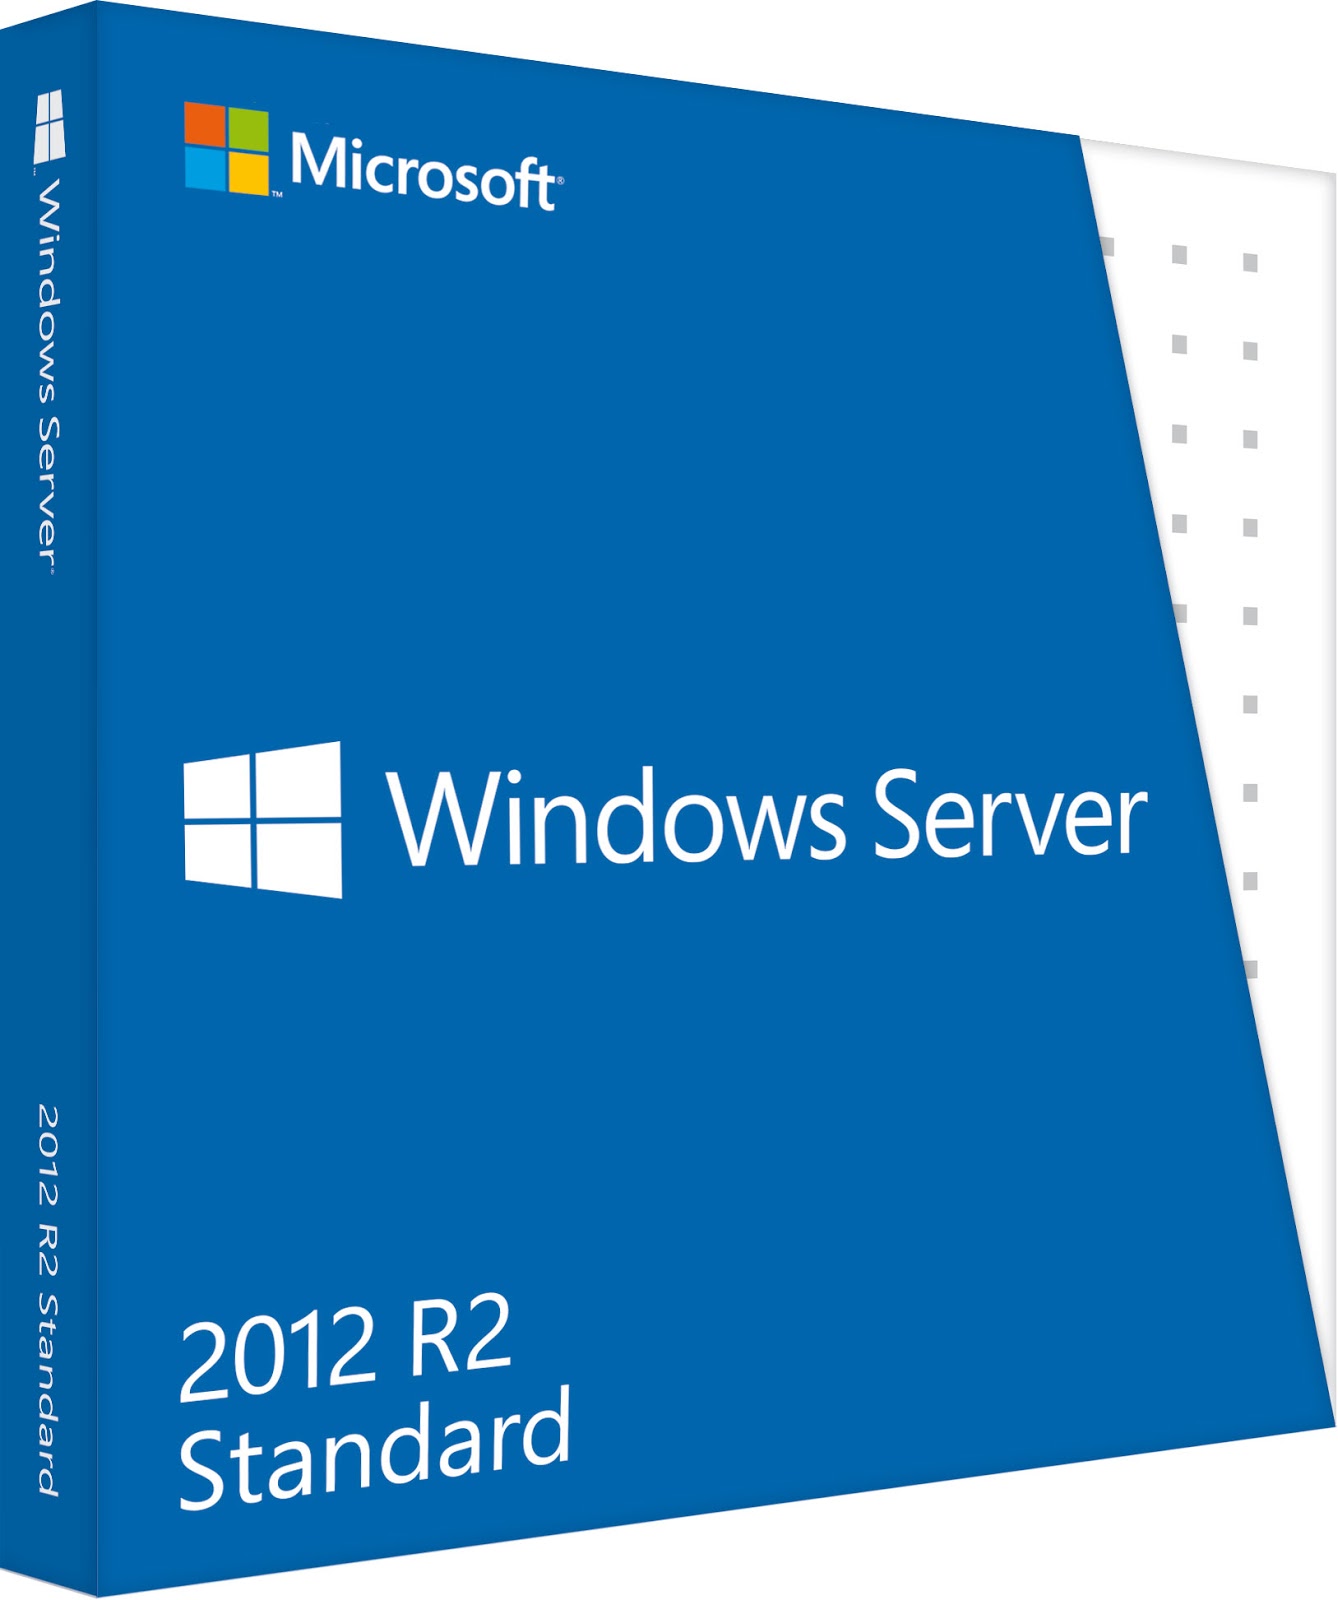 Windows Server 2012 R2 Foundation Iso